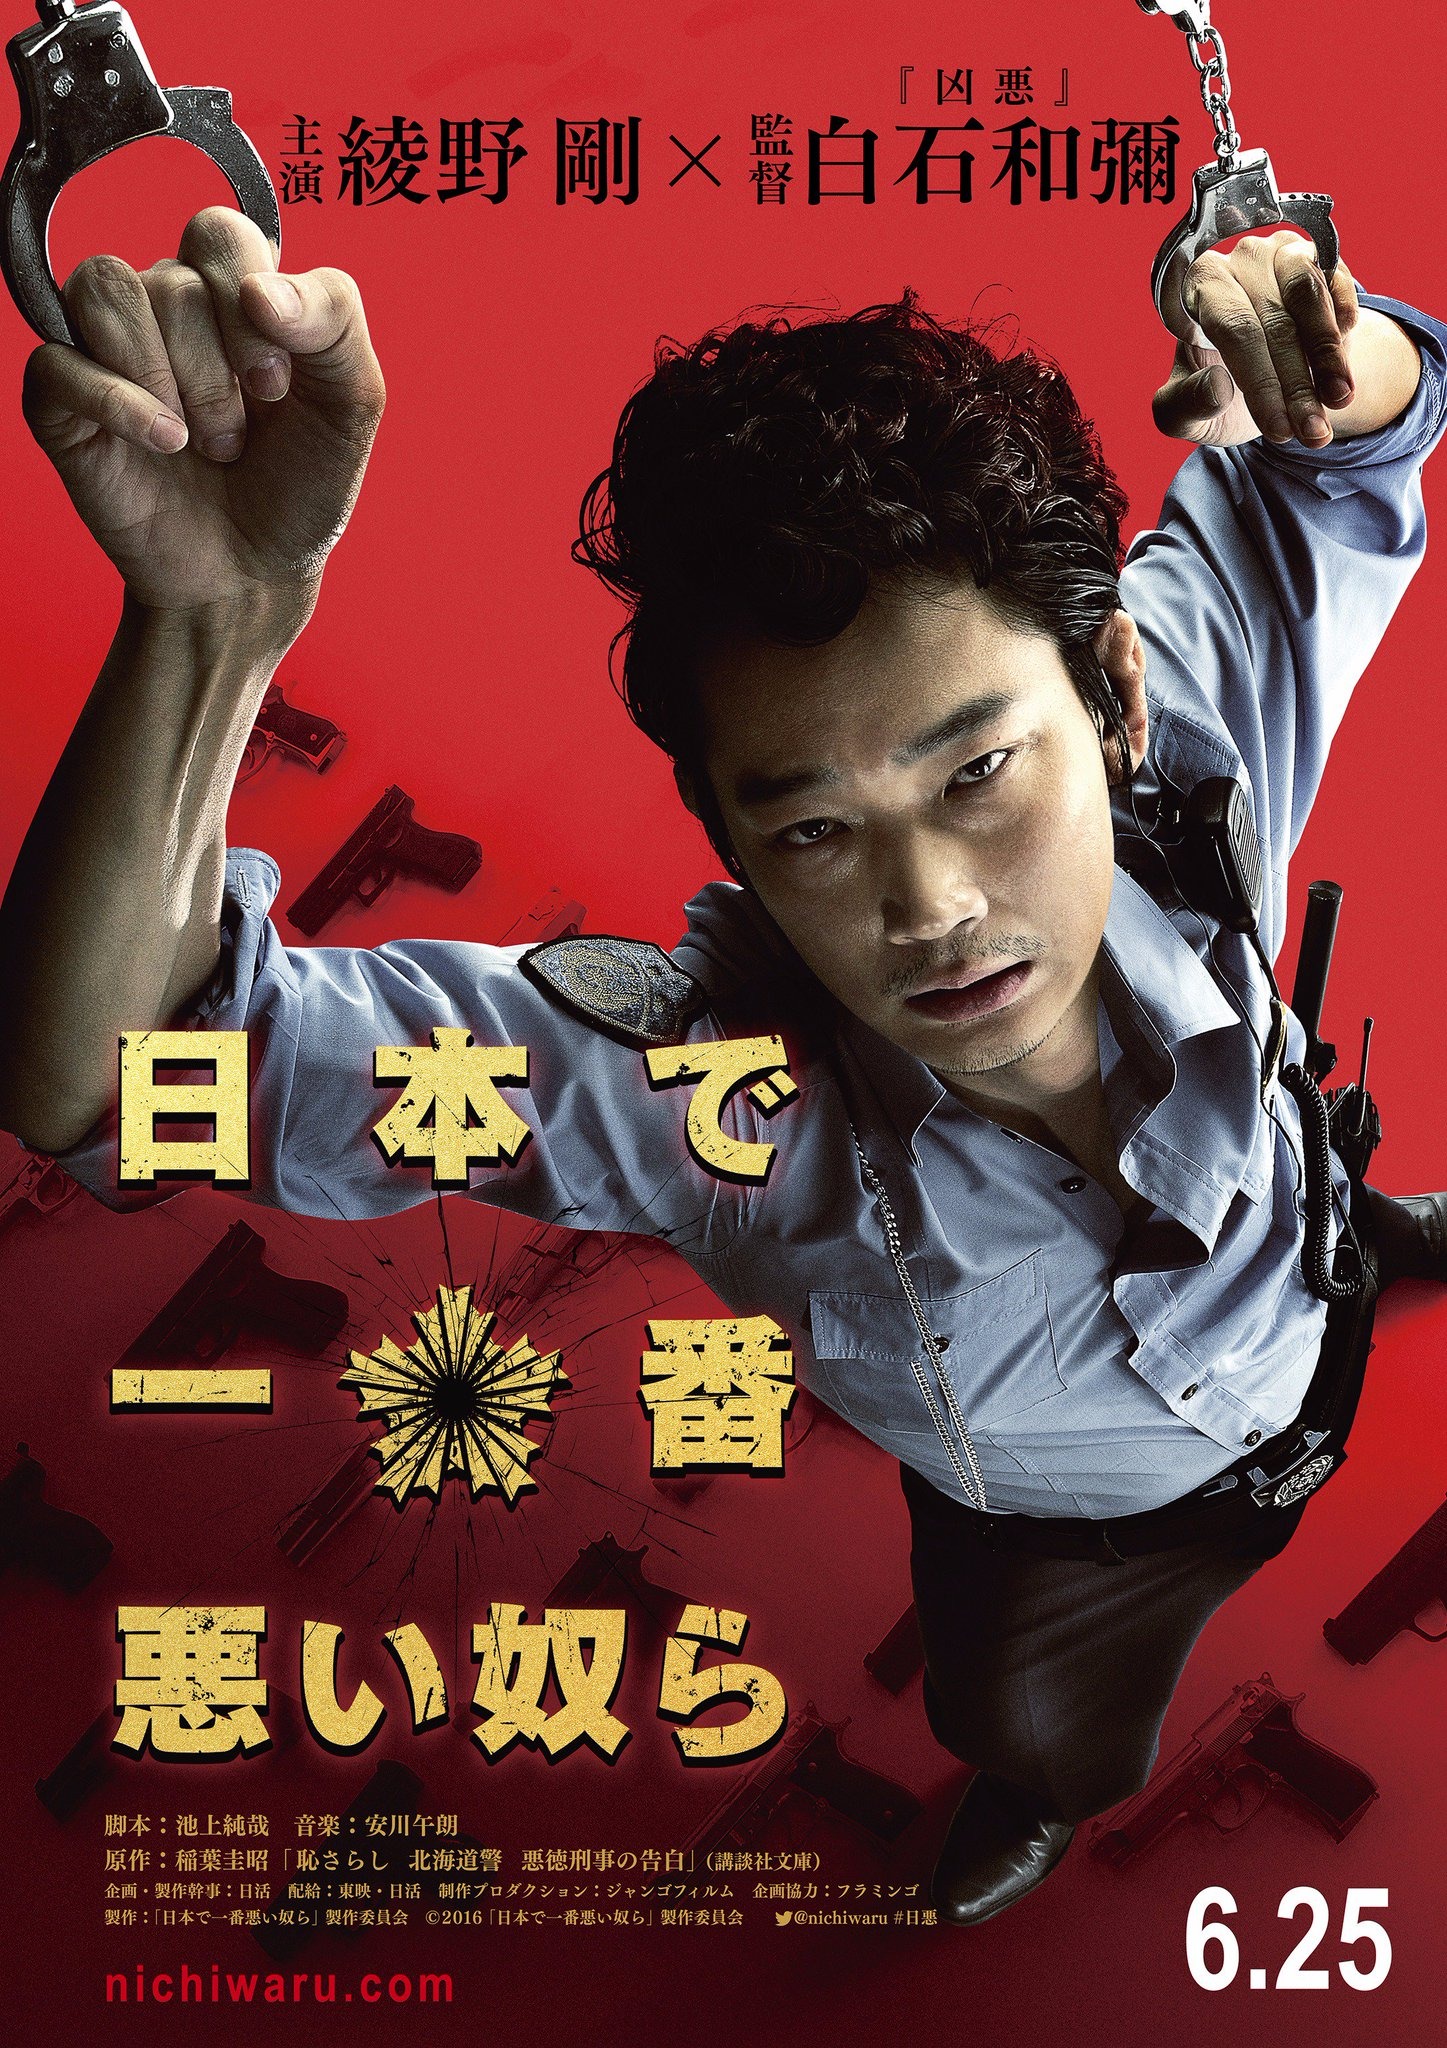 Nihon de ichiban warui yatsura (#1 of 3): Mega Sized Movie Poster Image ...